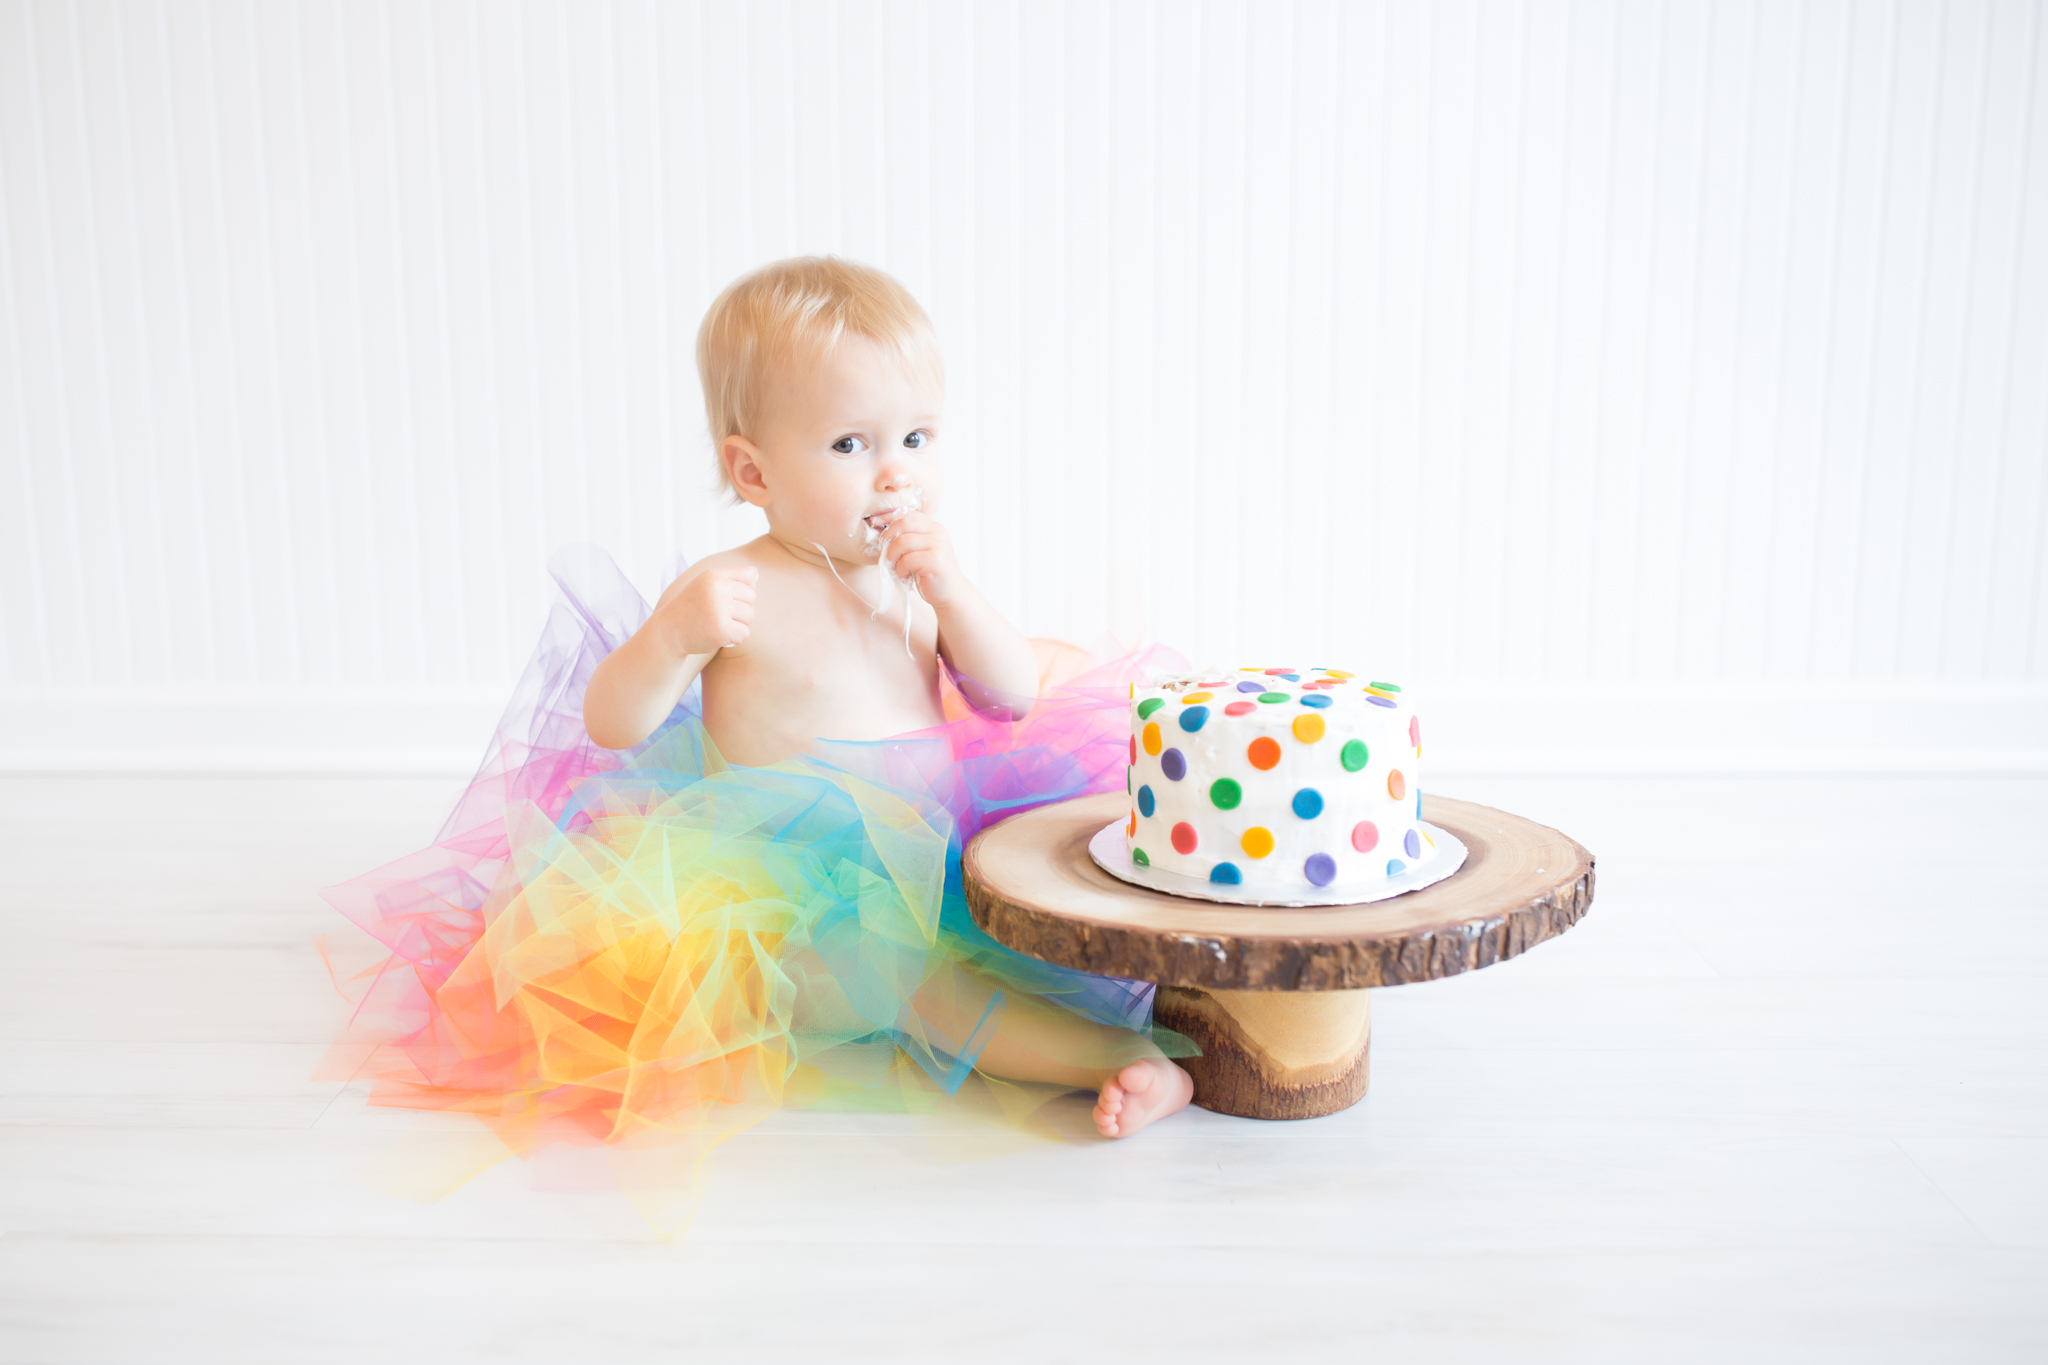 Milestone cake smash Newborn Studio Session | Cara Peterson Photography Rockford IL-11.jpg